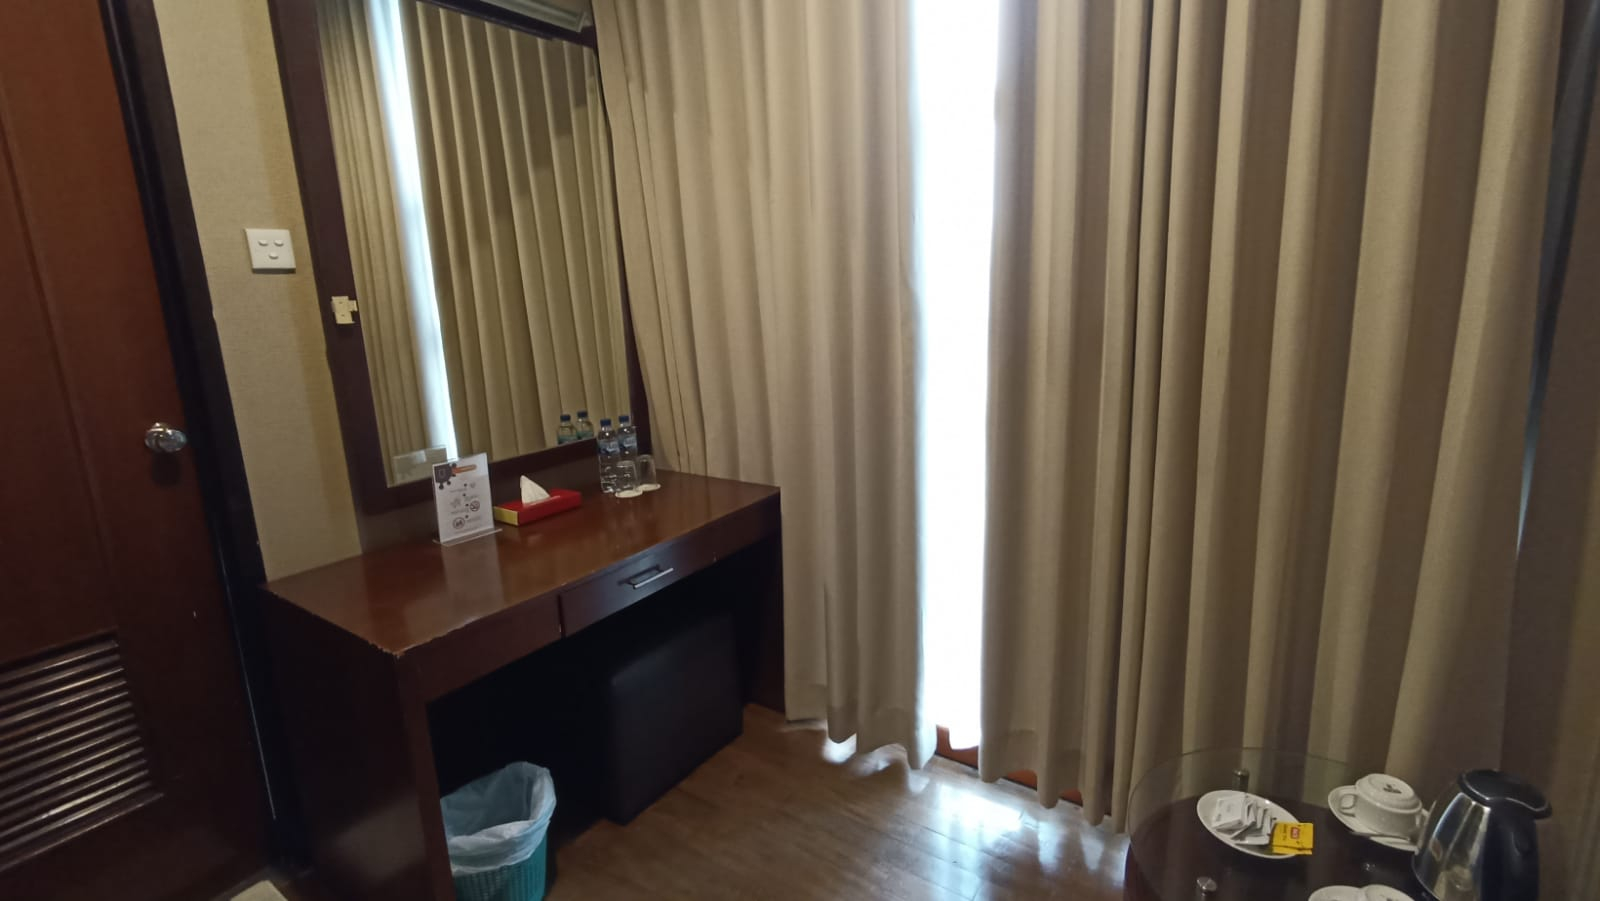 Bedroom 3, Enhaii Hotel, Bandung